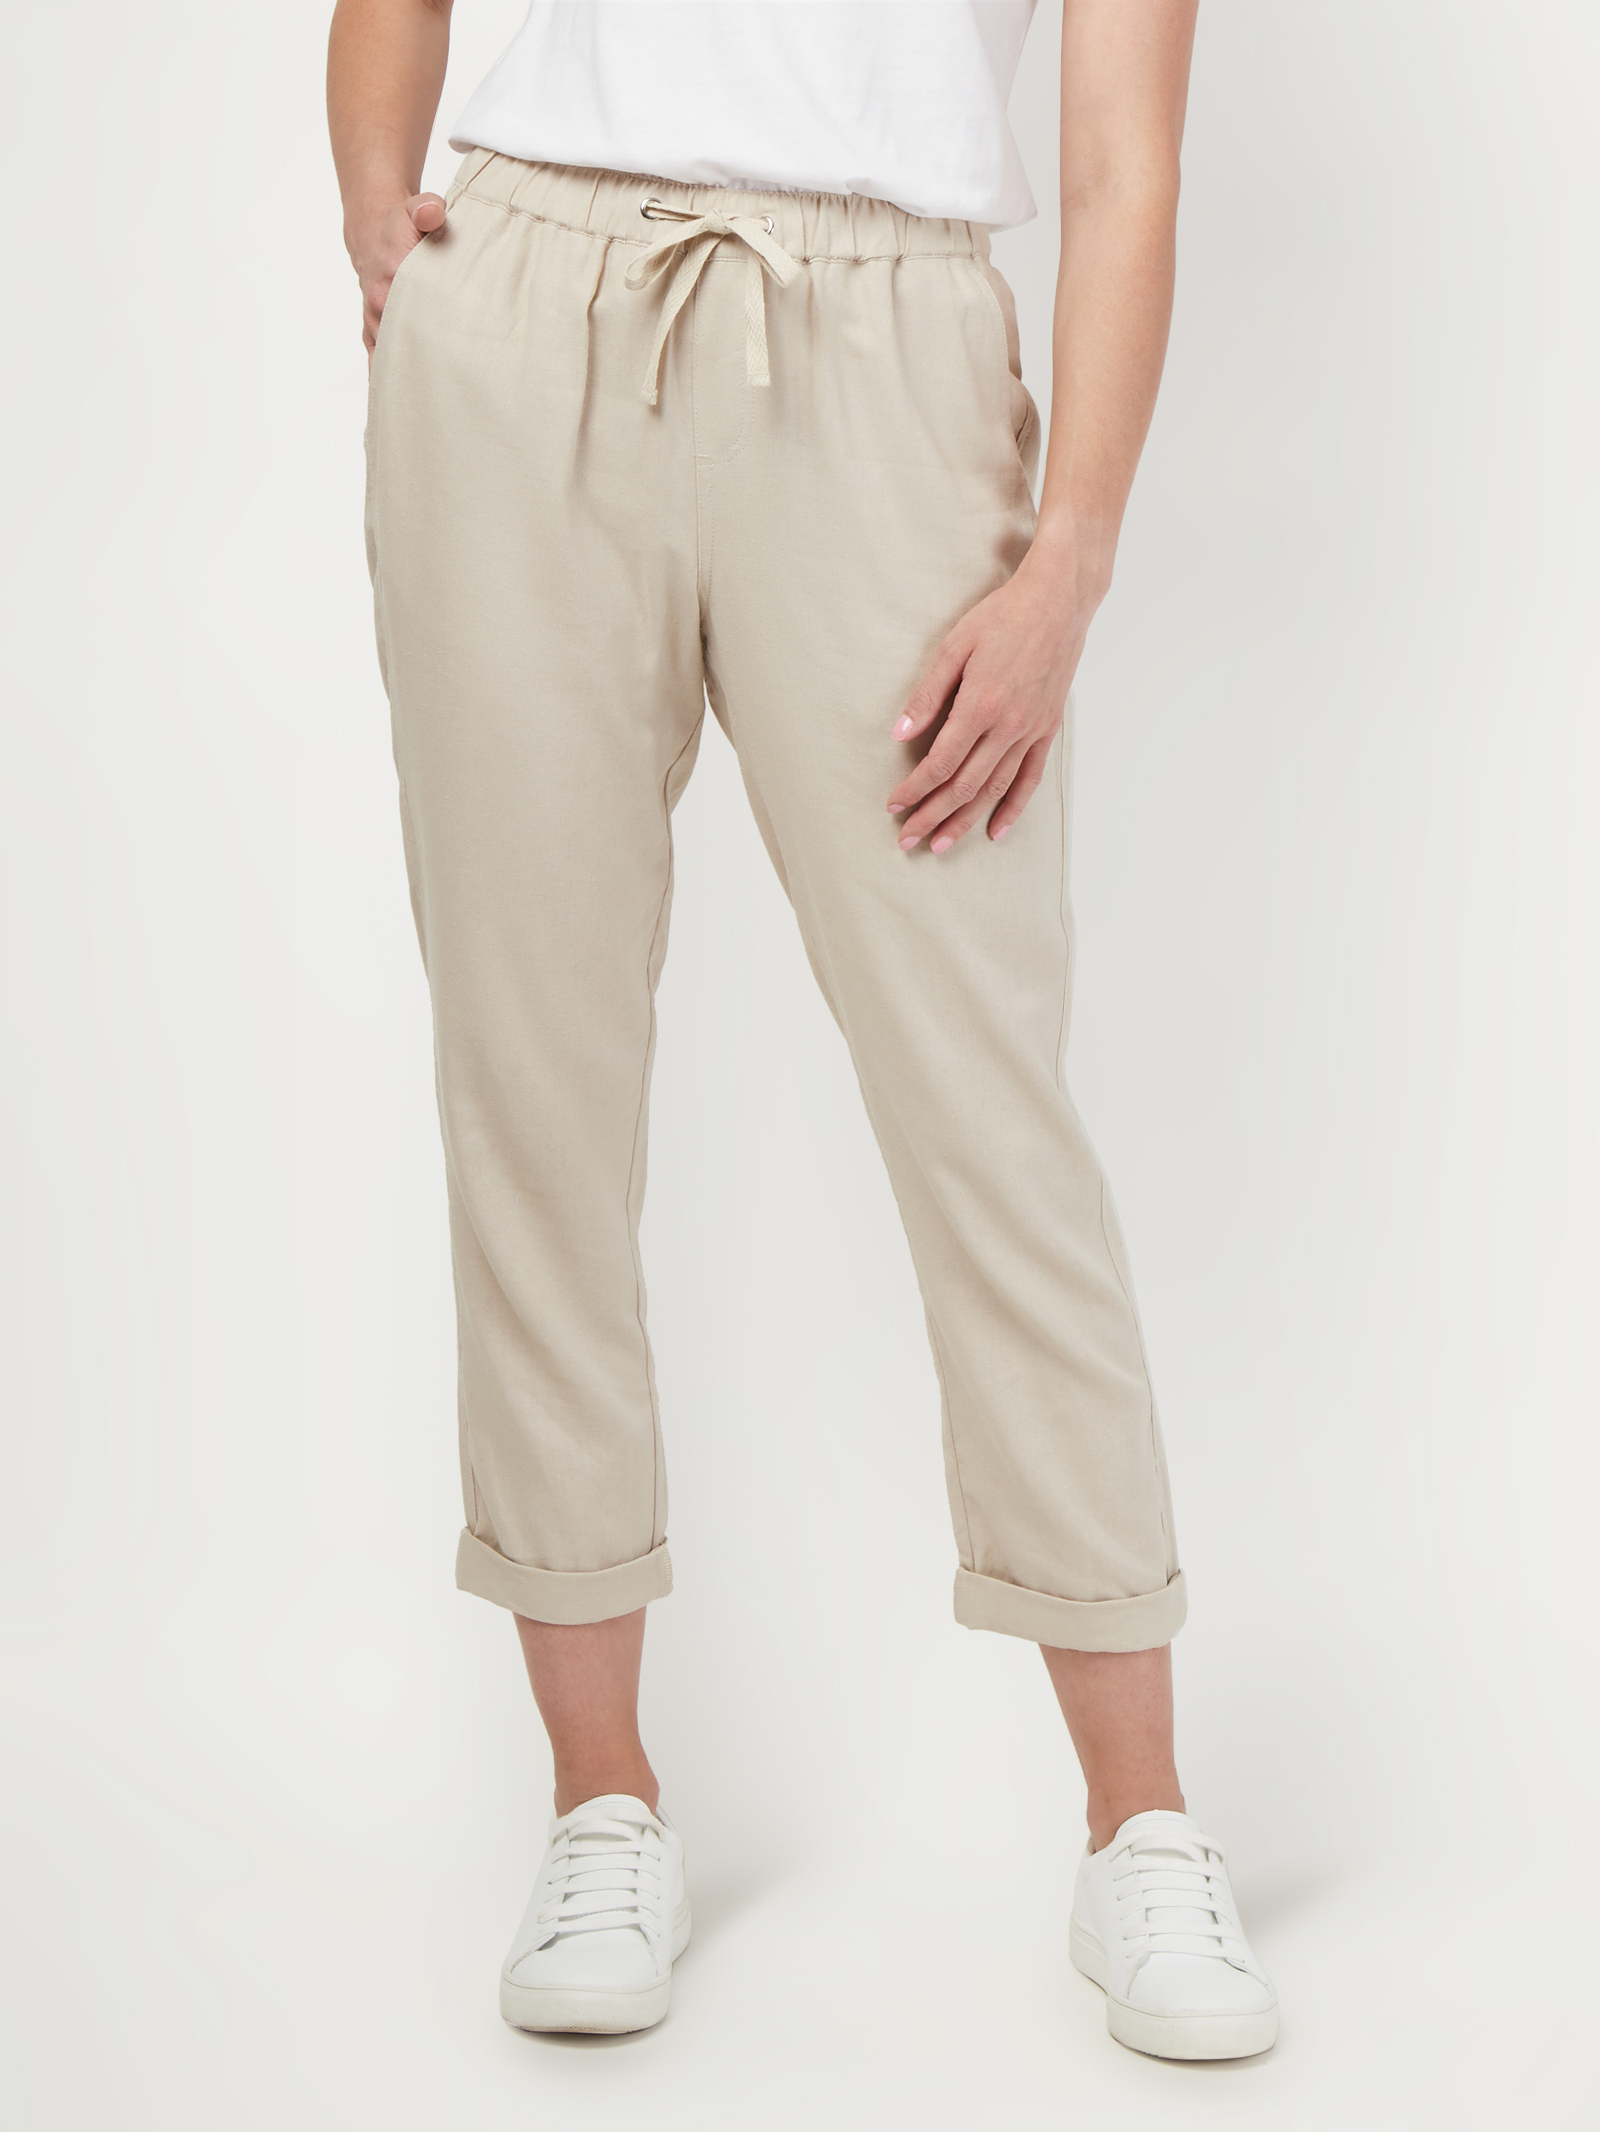 Buy 90s Eddie Bauer Tan/beige Linen Cotton Drawstring Pants Online in India  - Etsy